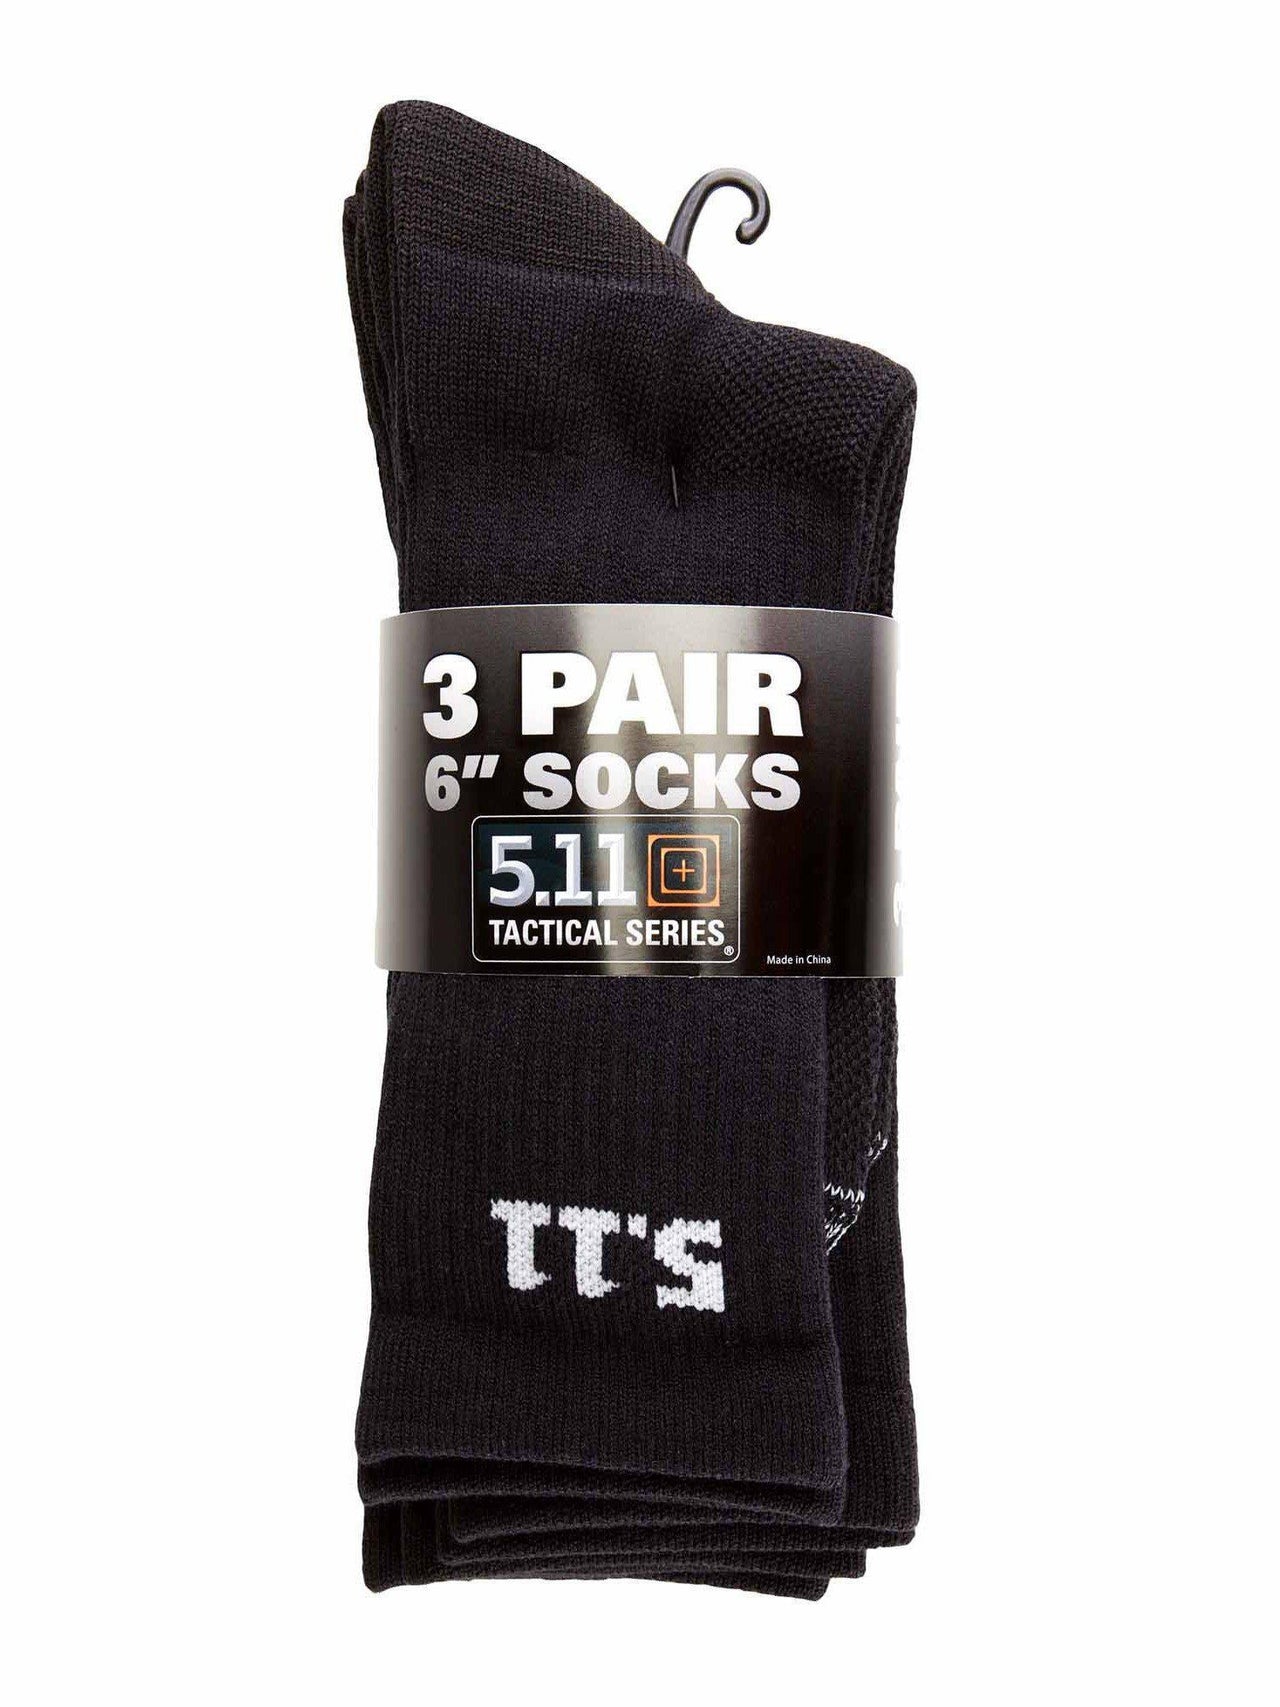 5.11 Tactical 6" Socks 3 Pack - Black - TacSource